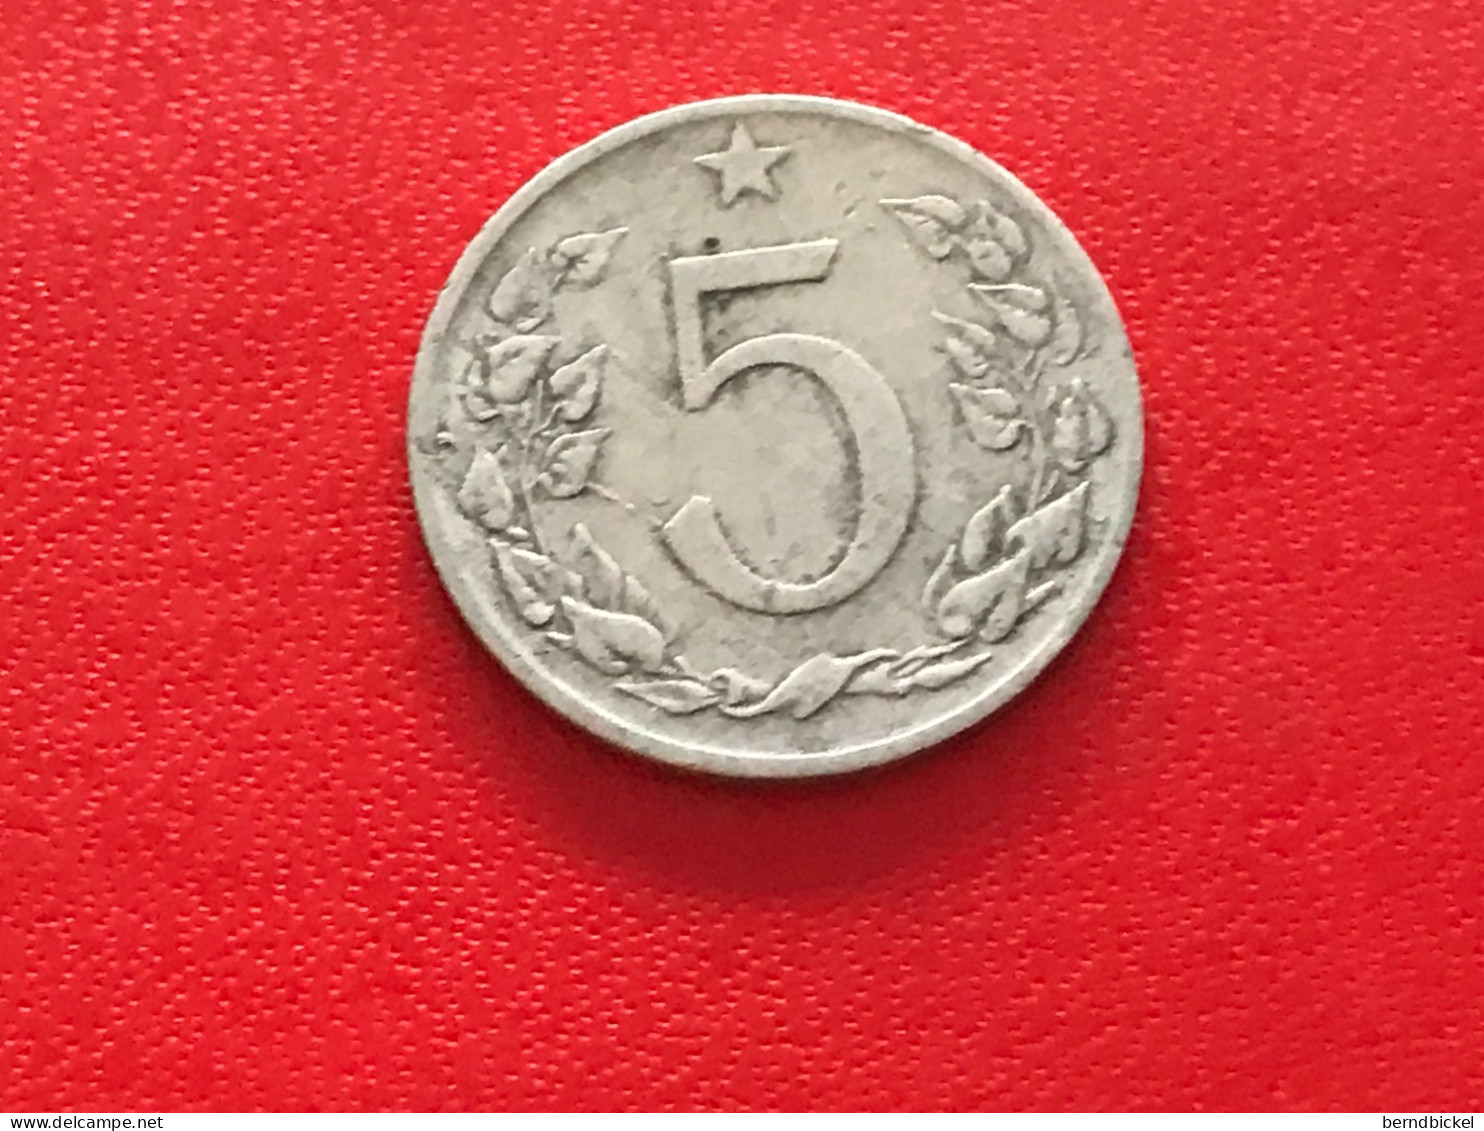 Münze Münzen Umlaufmünze Tschechoslowakei 5 Heller 1953 - Czechoslovakia